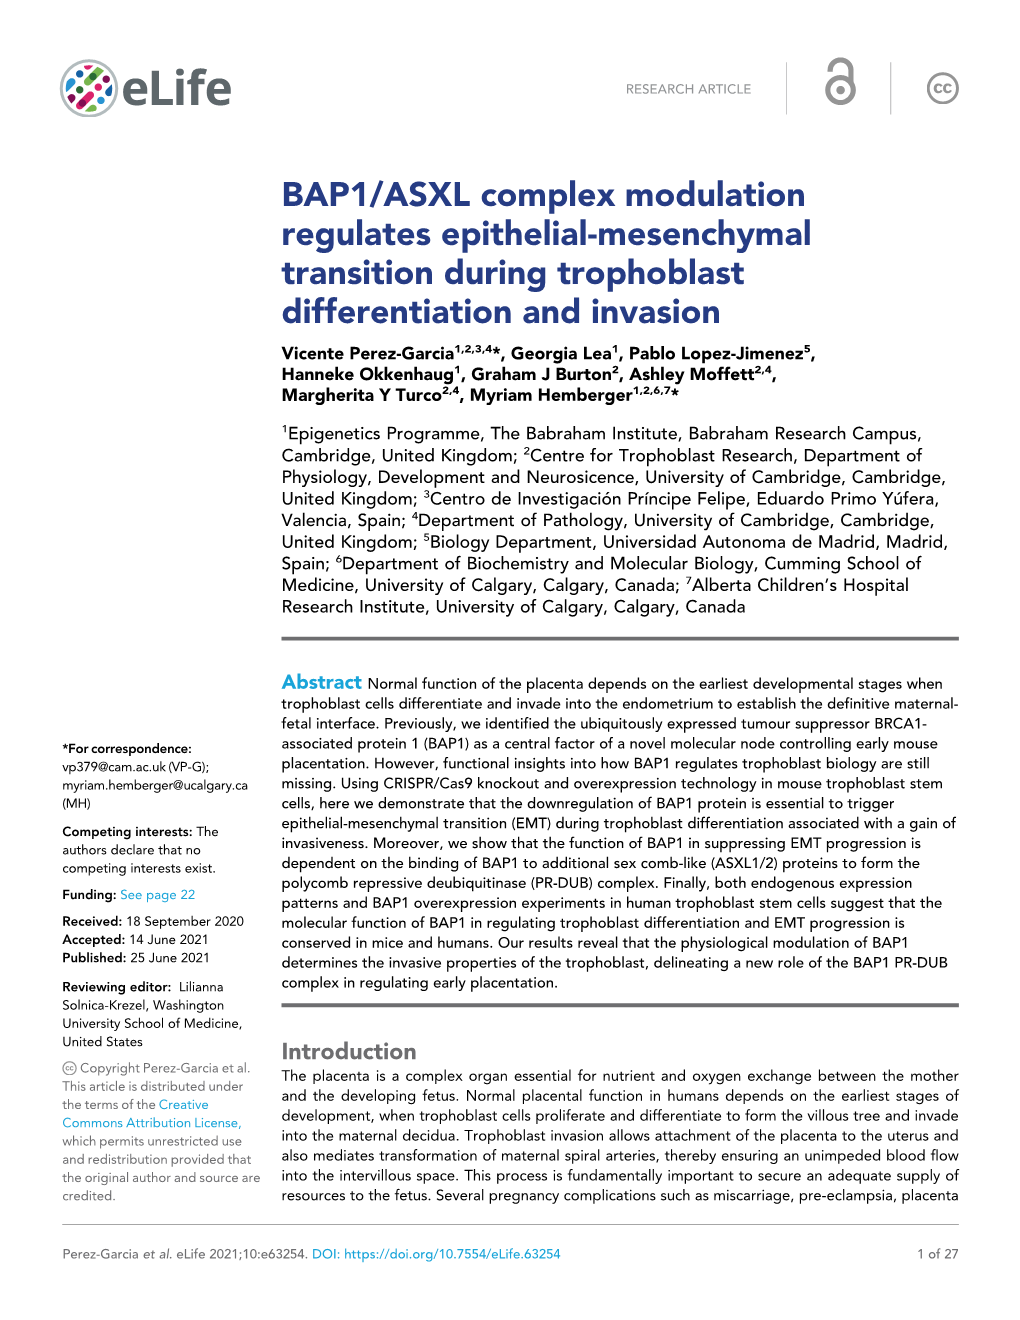 BAP1/ASXL Complex Modulation Regulates Epithelial-Mesenchymal